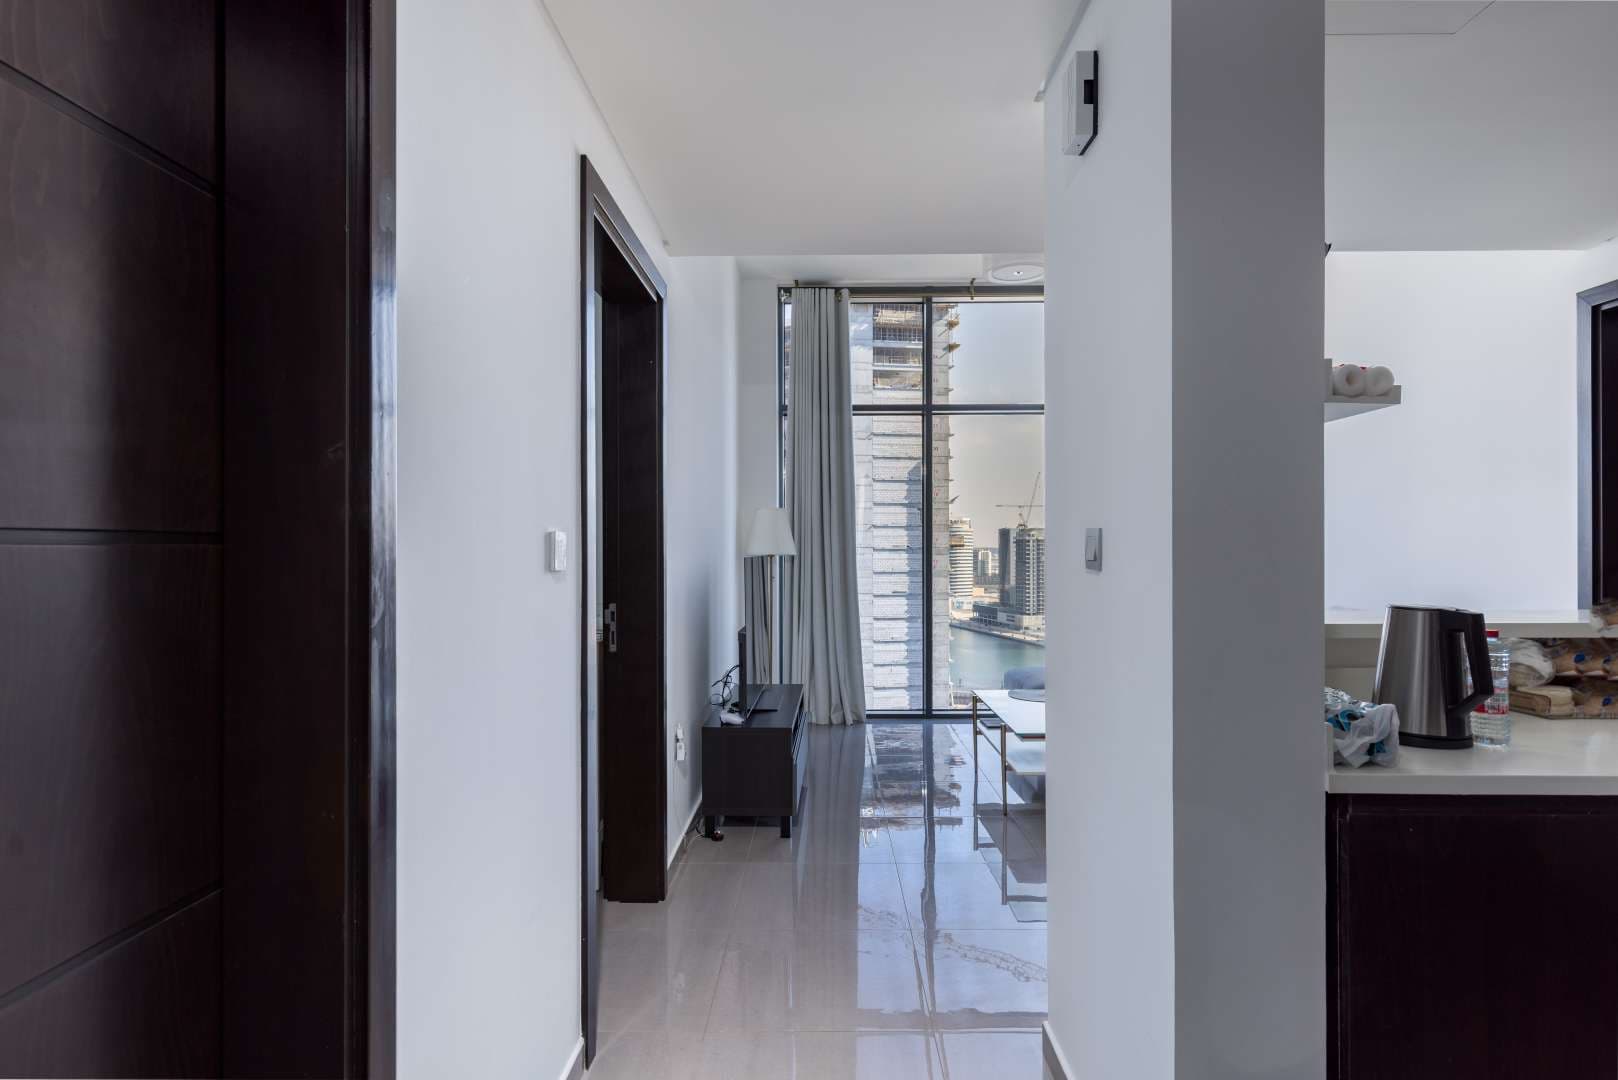 2 Bedroom Apartment For Sale Merano Tower Lp09599 1526f192616c3900.jpg